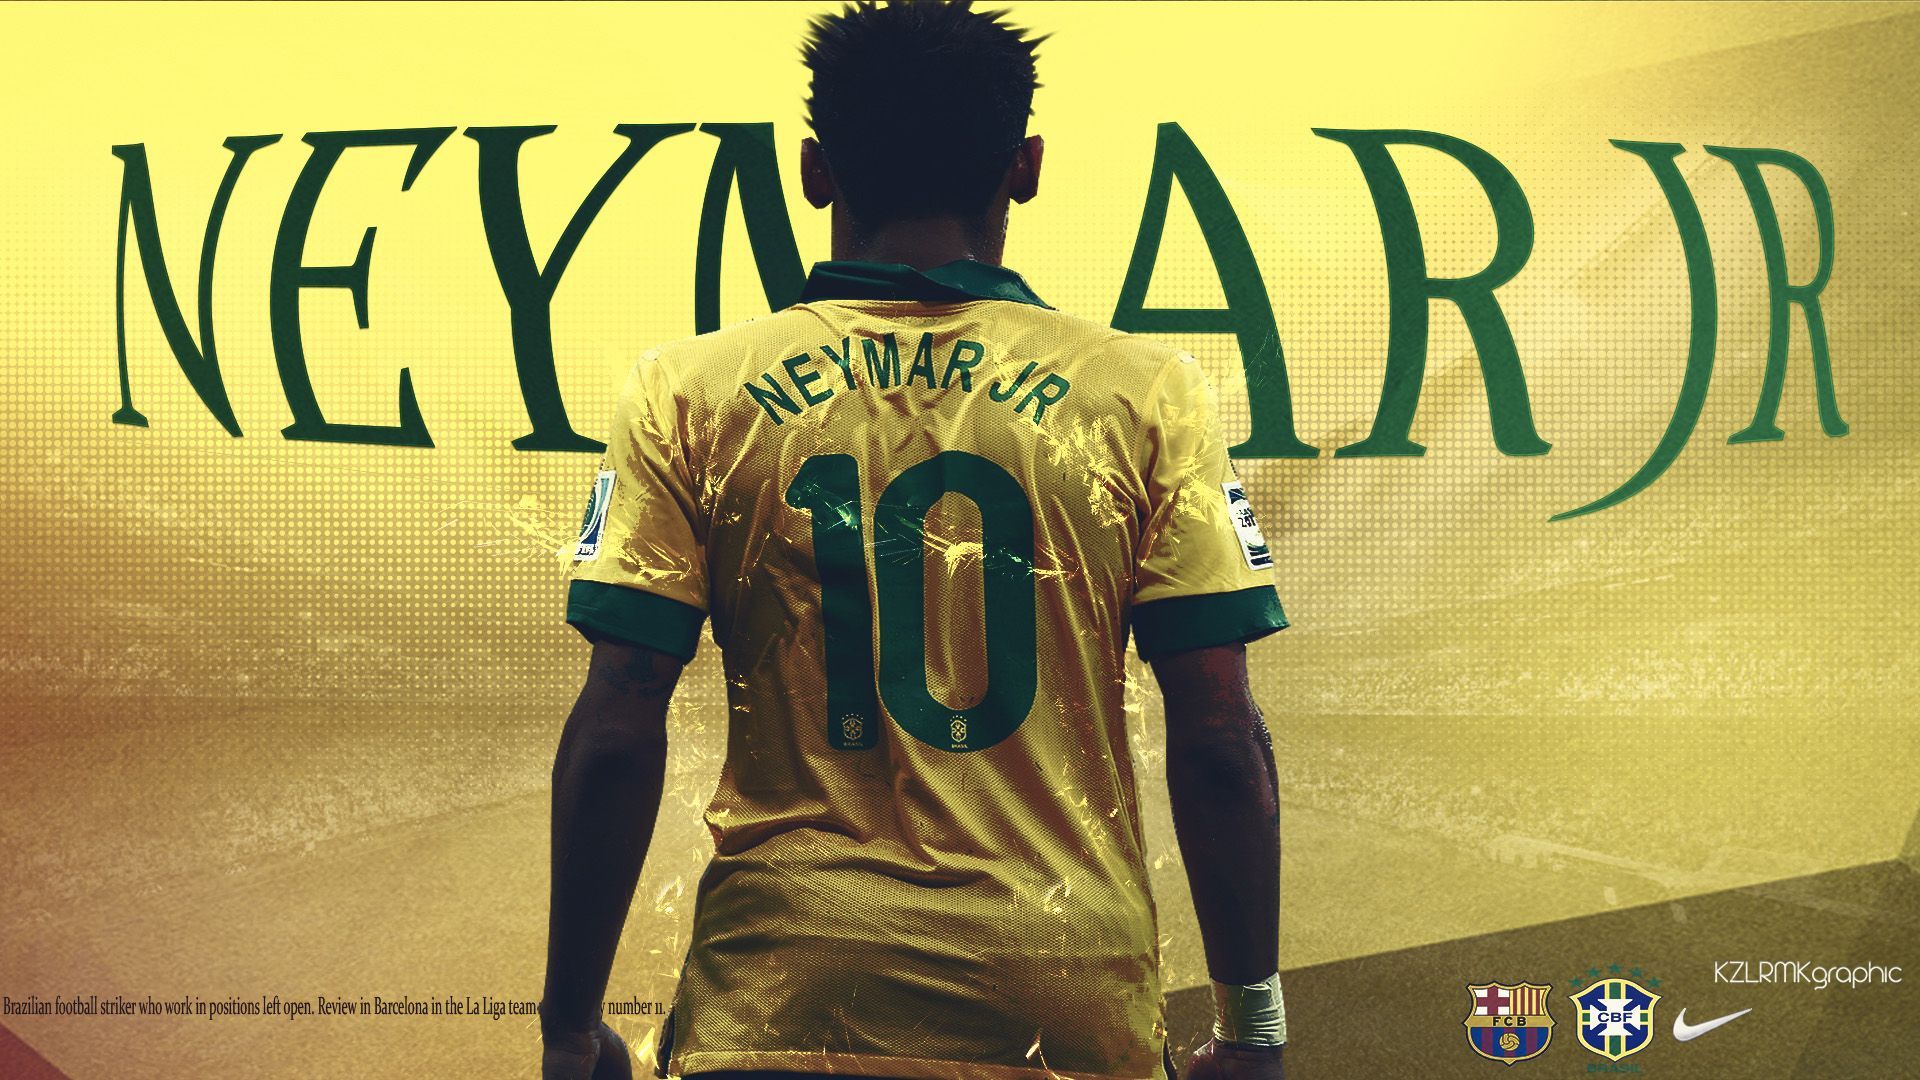 Neymar Football Wallpaper. Neymar, Neymar jr, Neymar football